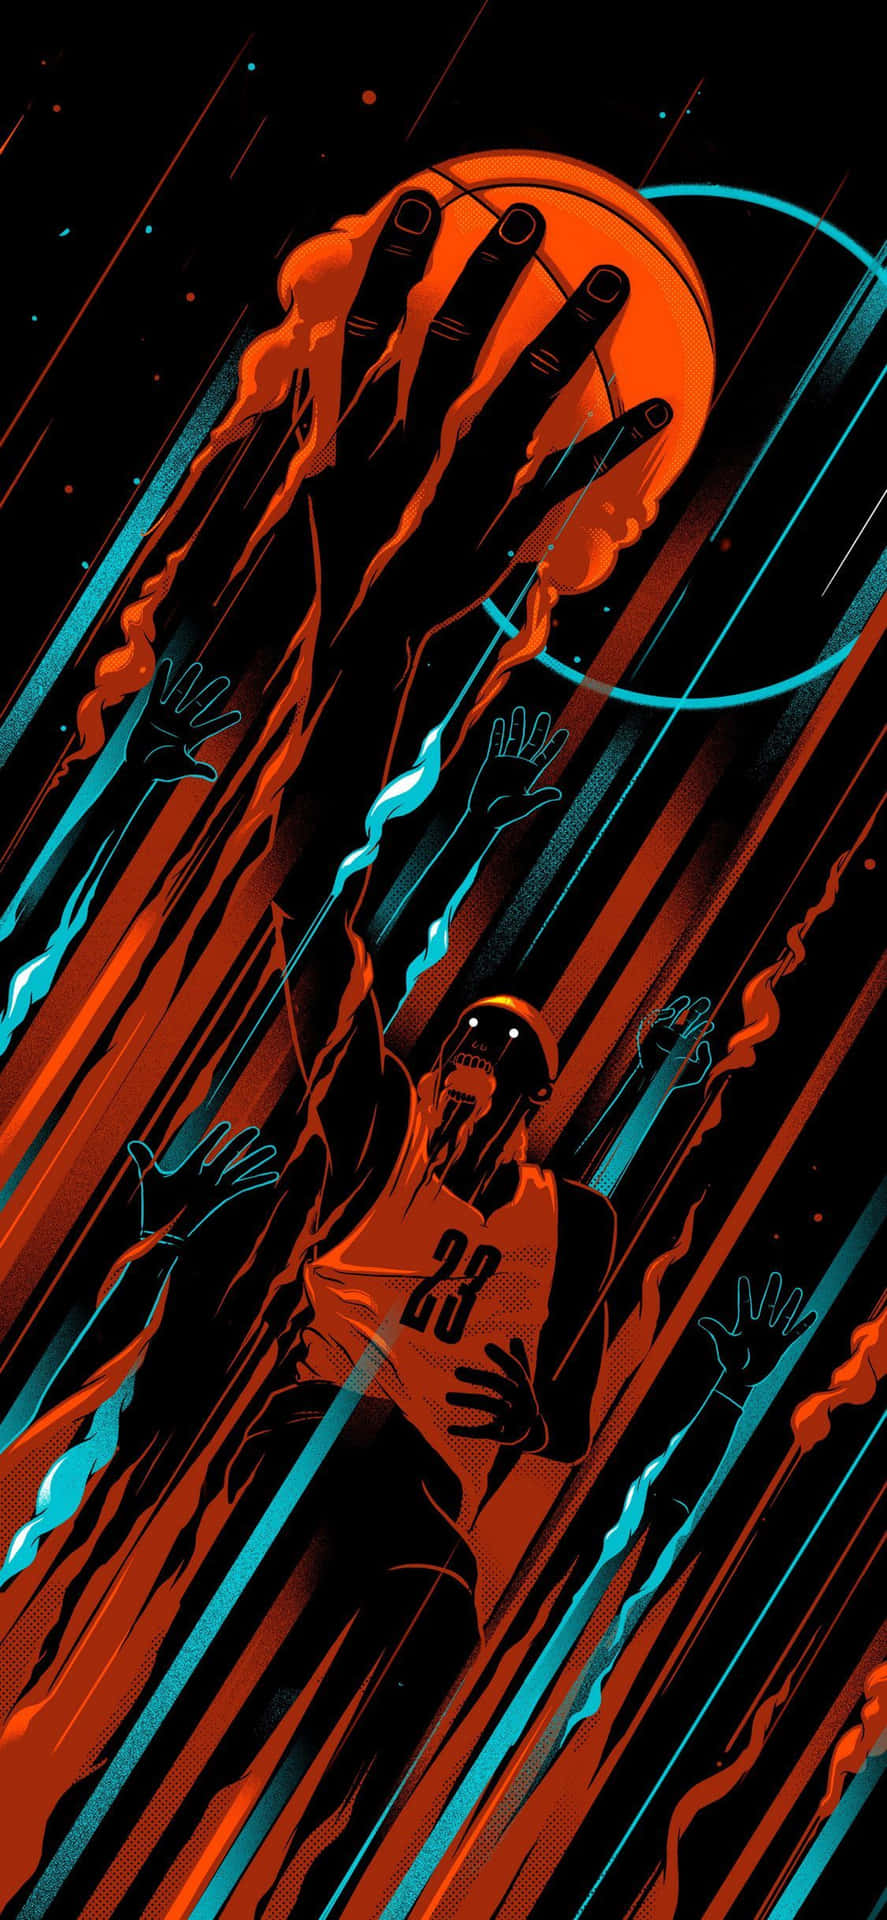 Lebron James Black Basketball Digital Art Background